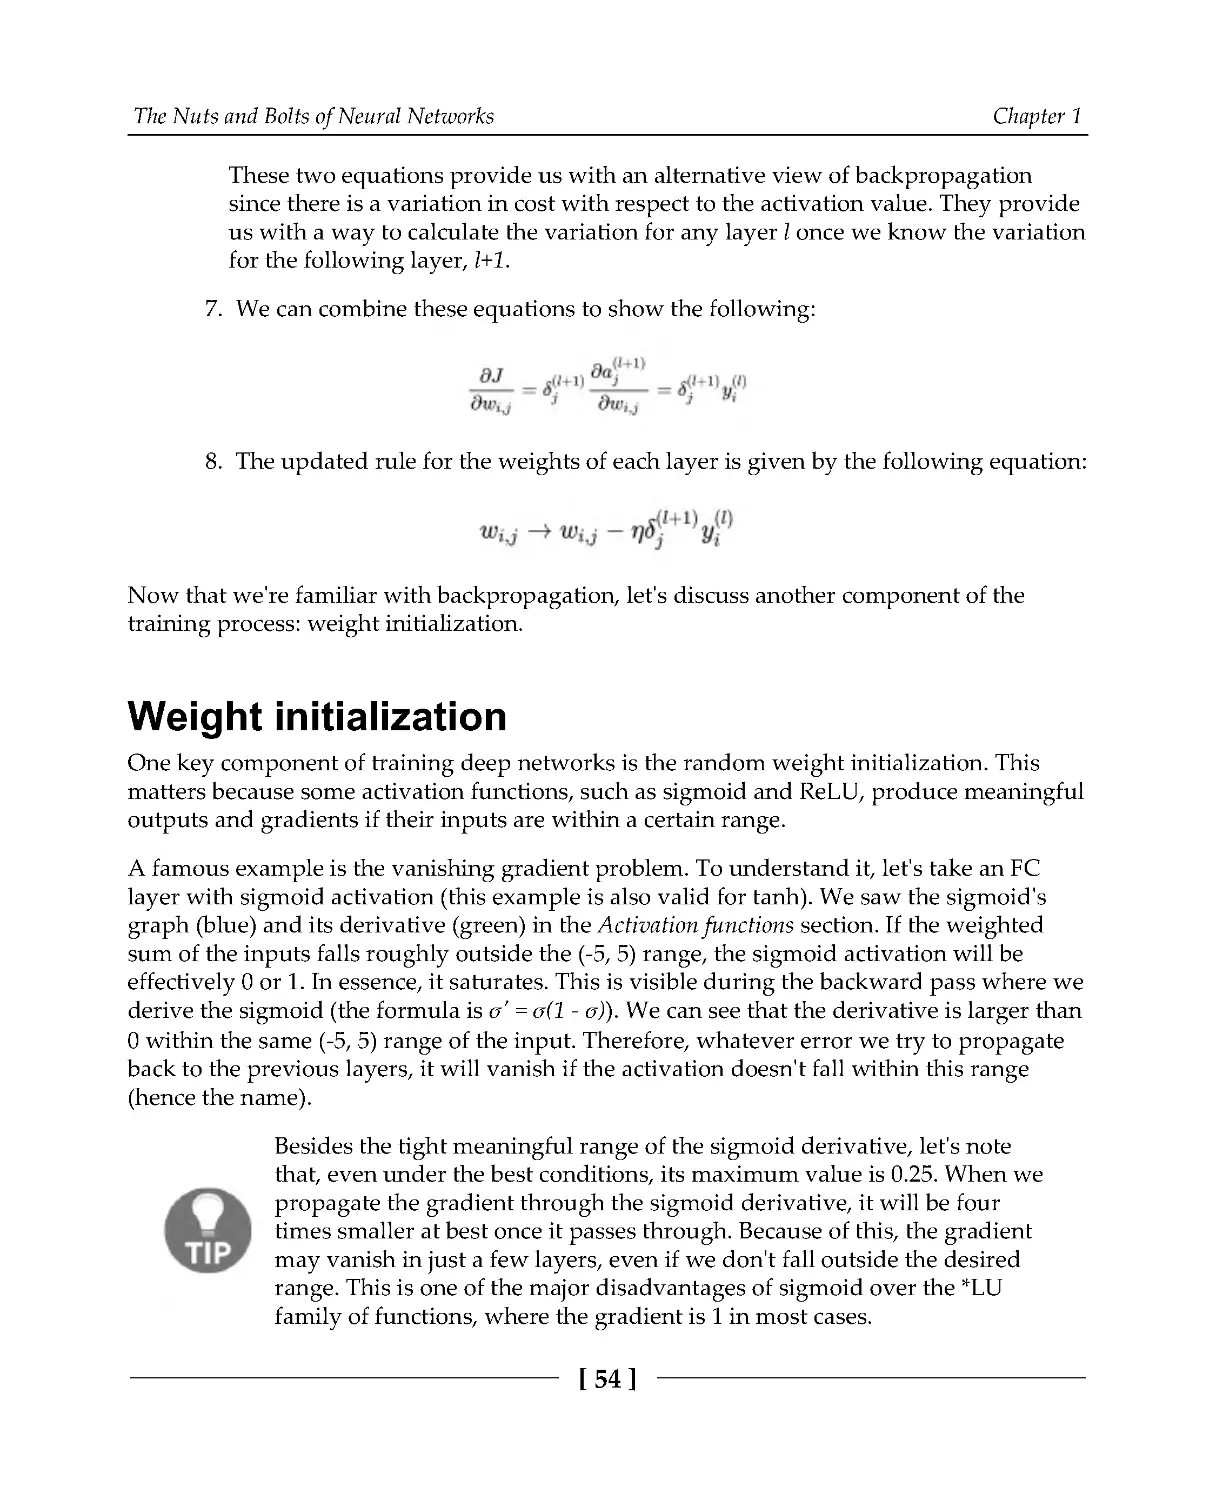 Weight initialization